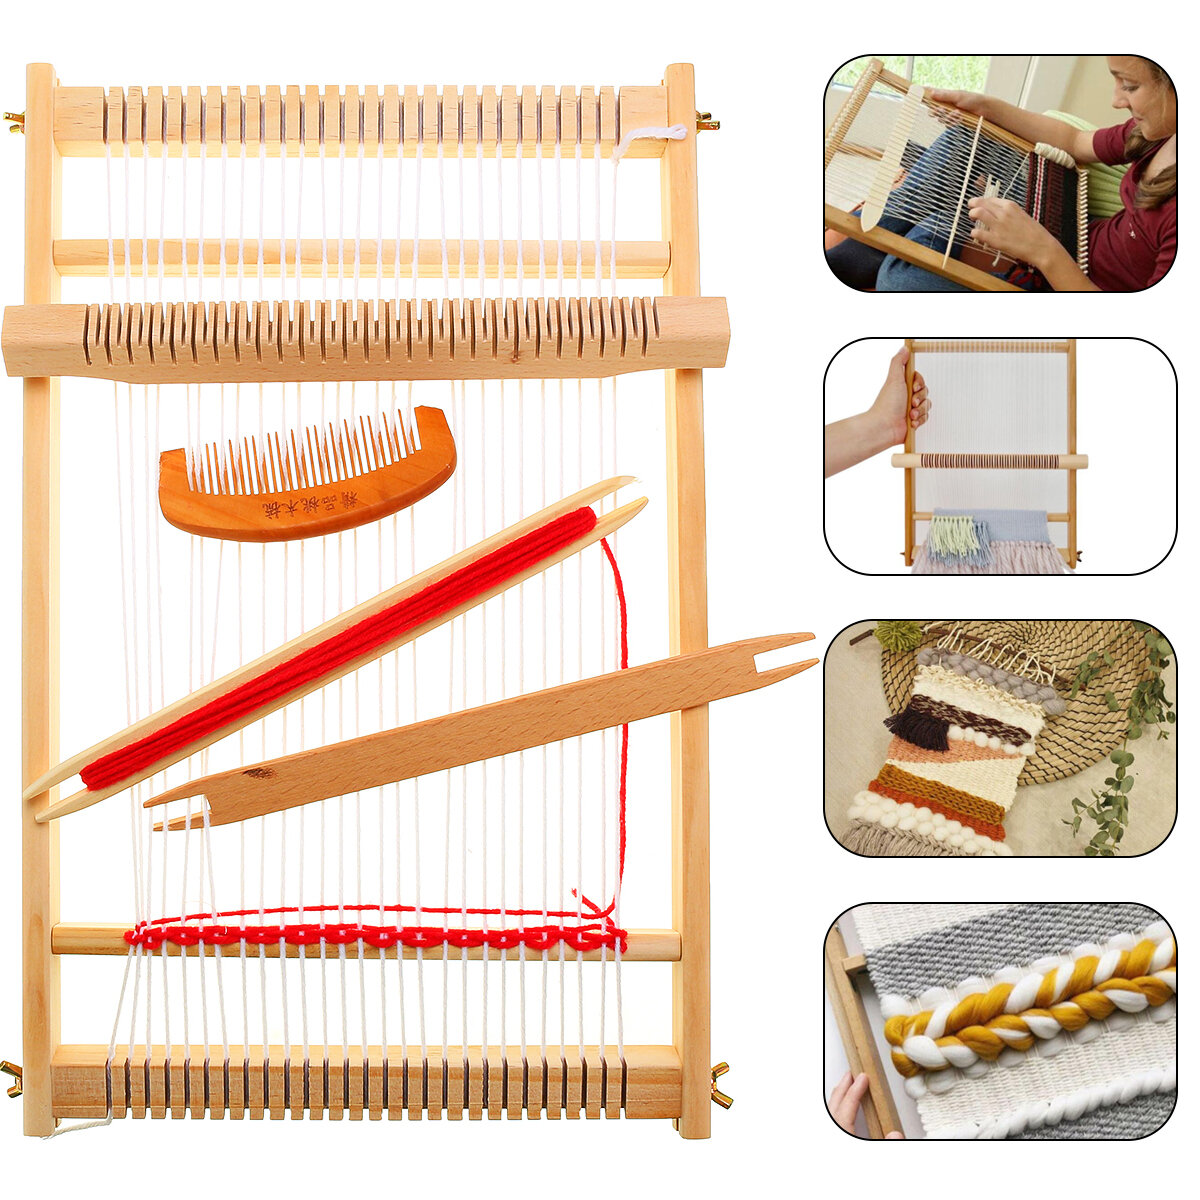 DIY Traditionele Houten Weven Loom Machine Fantasiespel Speelgoed Kids Breien Craft